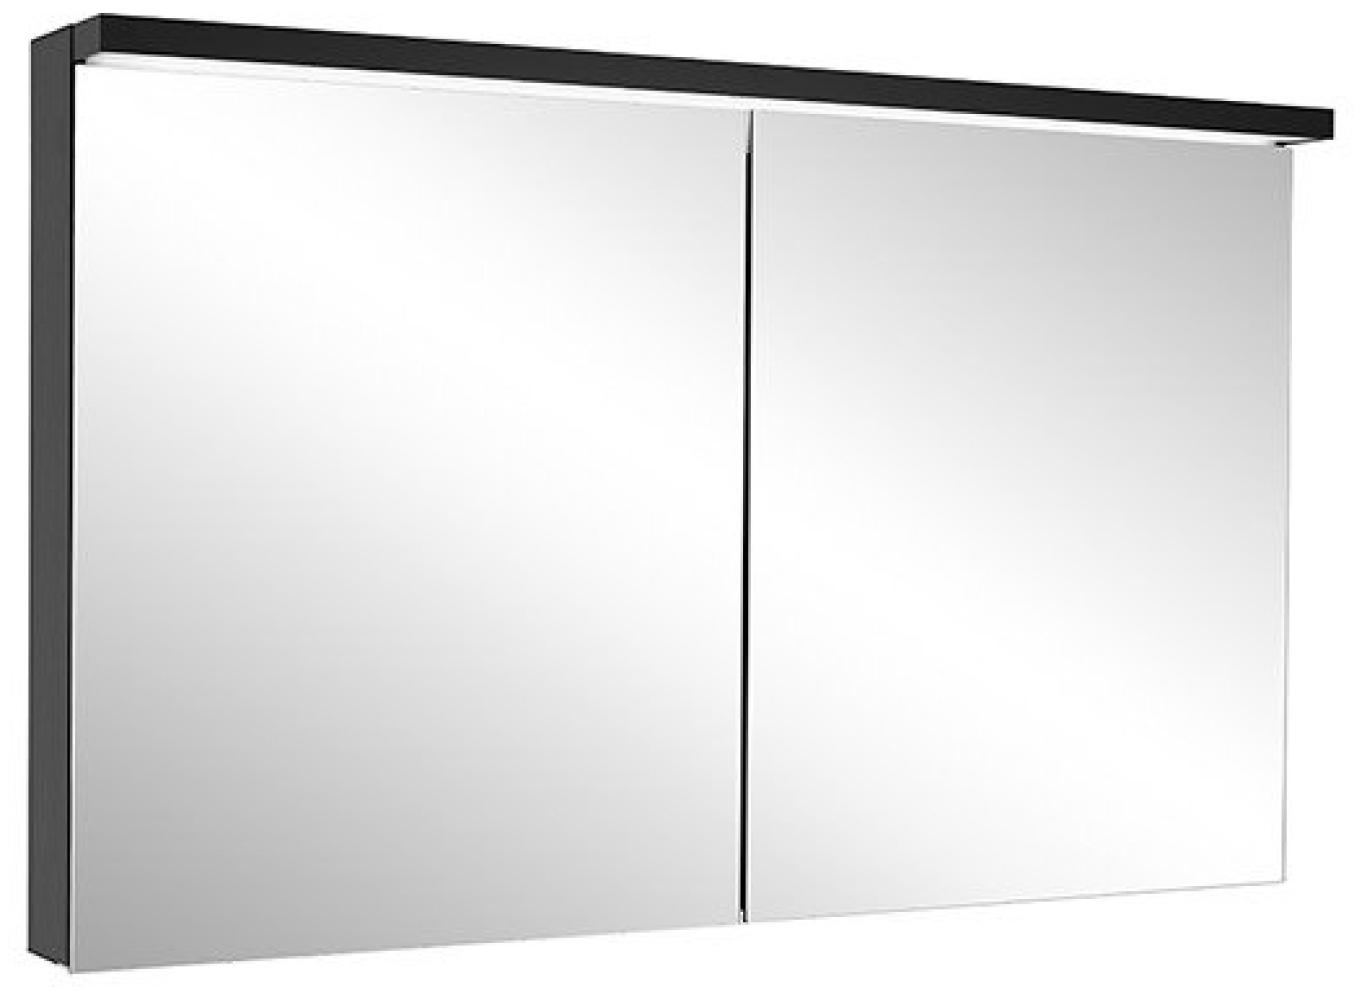 Schneider ADVANCED Line Ultimate LED Lichtspiegelschrank, 2 Türen, 99,5x72,6x17,8cm, 188. 100, Ausführung: EU-Norm/Korpus schwarz matt - 188. 100. 02. 41 Bild 1